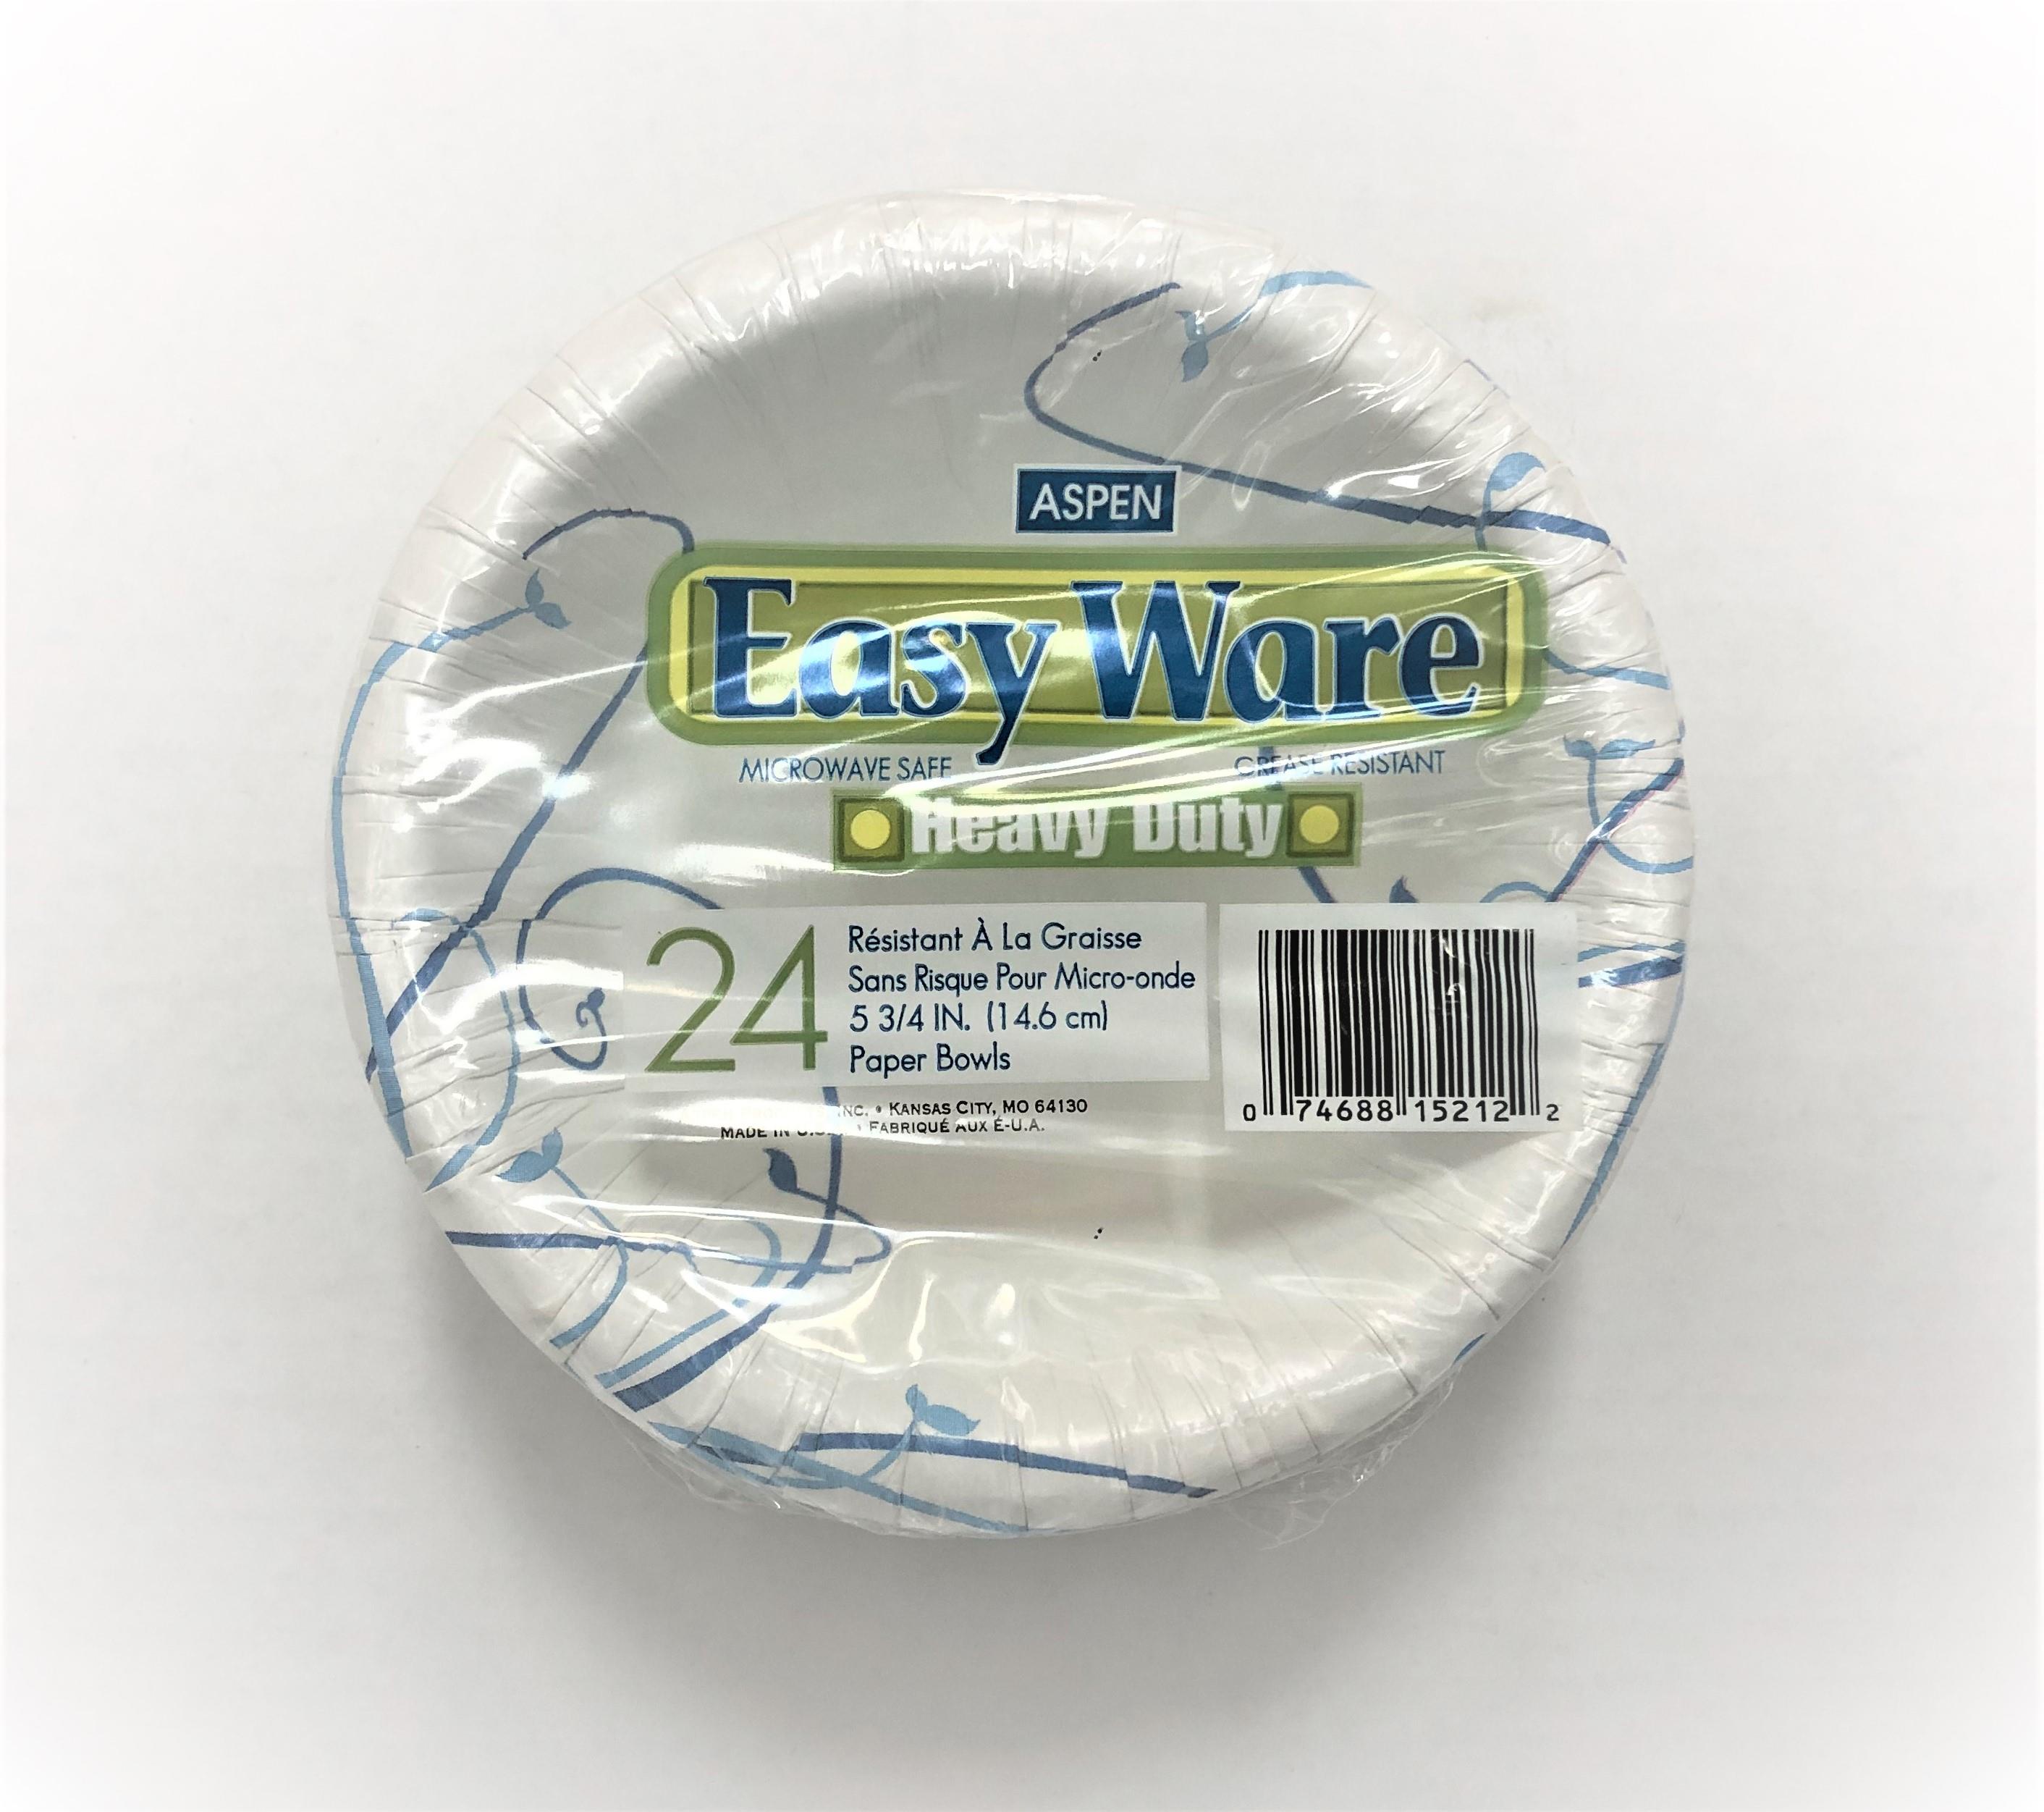 Easy WareTM 20oz Heavy Duty Coated Paper Bowls, 300/Case